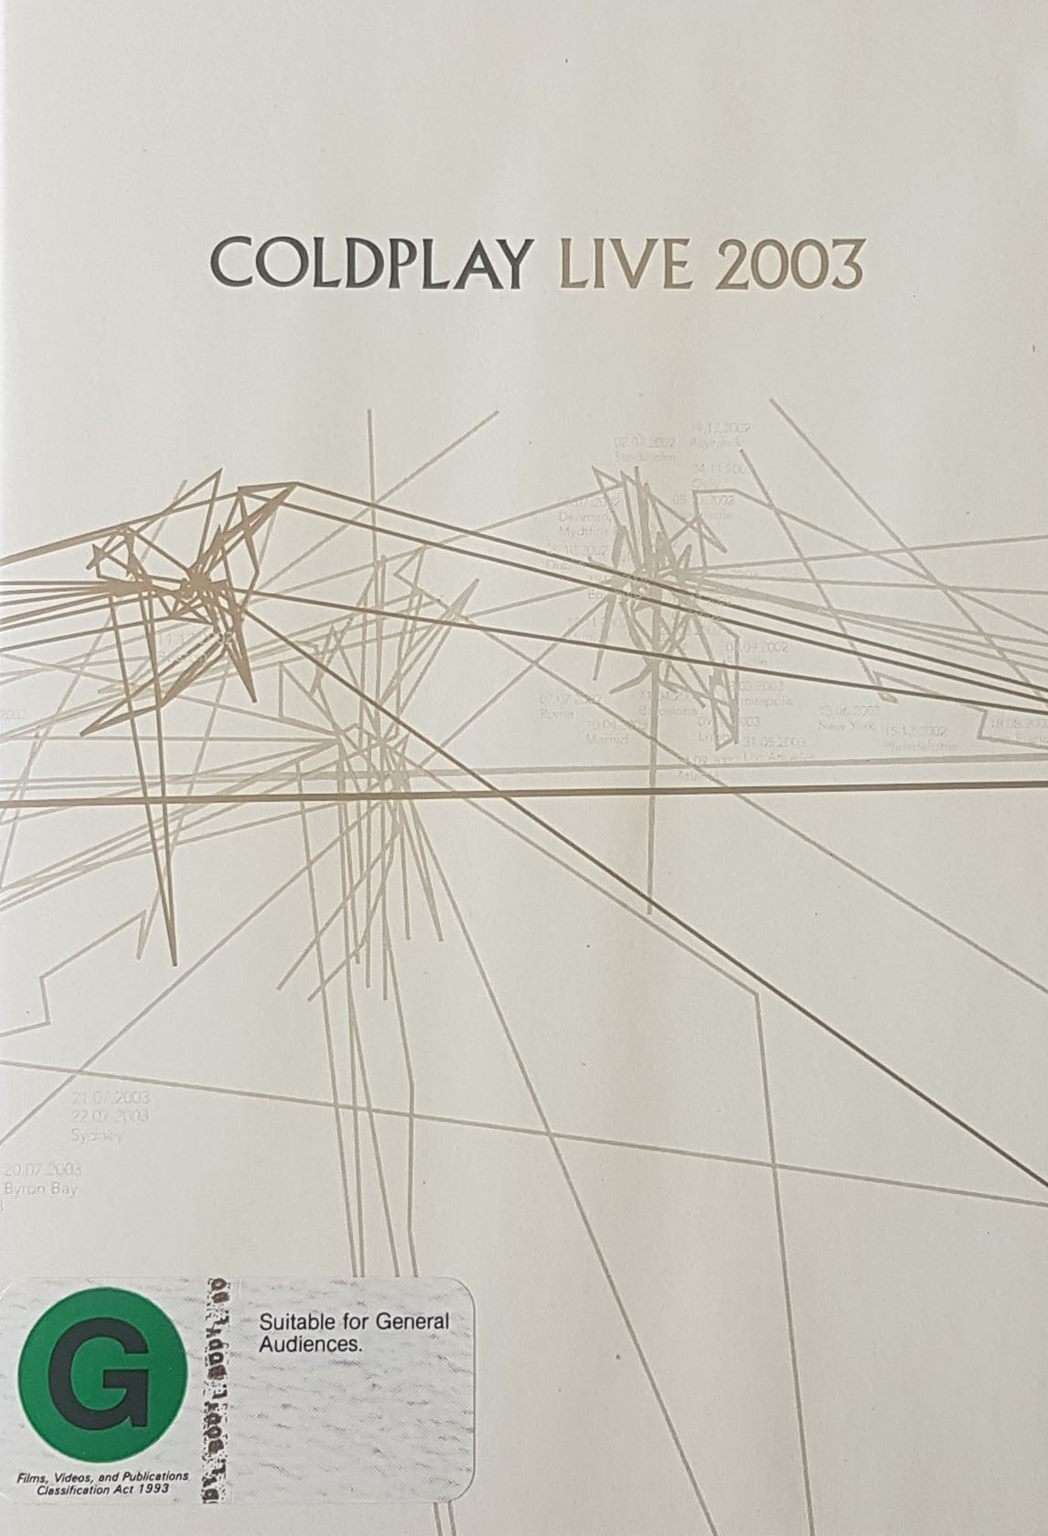 Coldplay Live 2003 DVD/CD